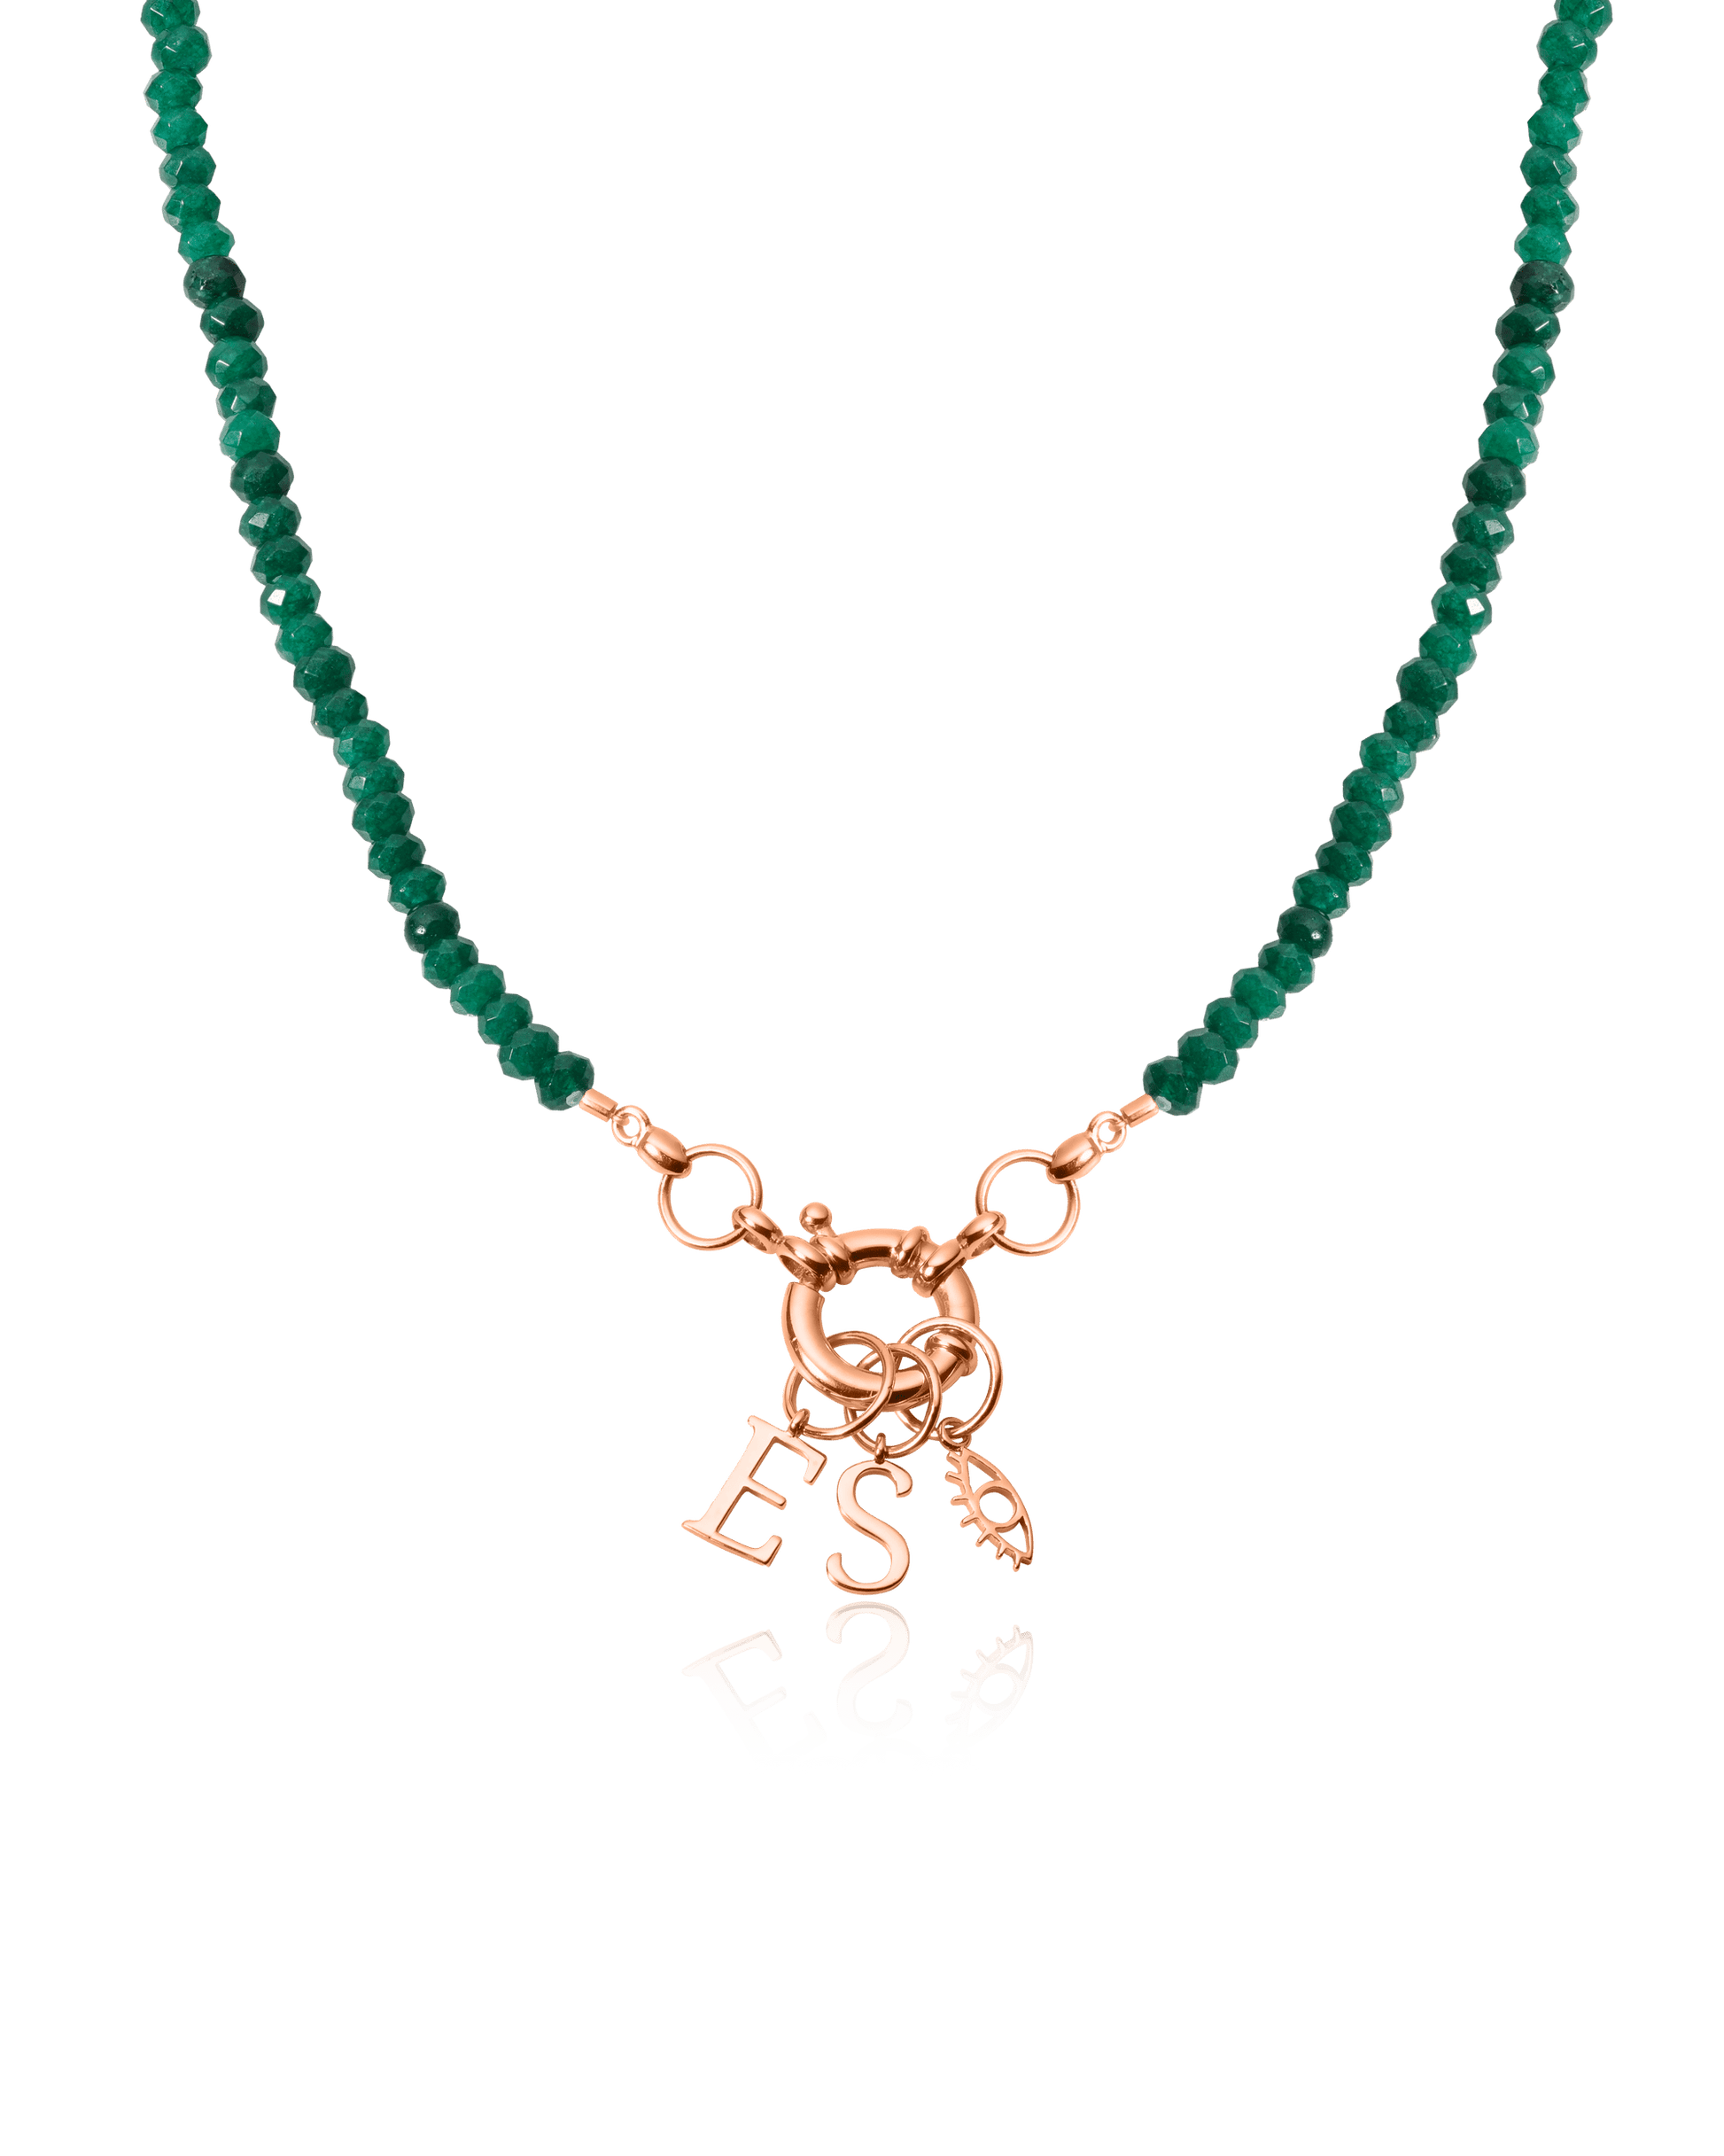 Green Jade Charm Lock Necklace - 18K Rose Vermeil Necklaces magal-dev Green Jade Gemstones 1 Charm 16"